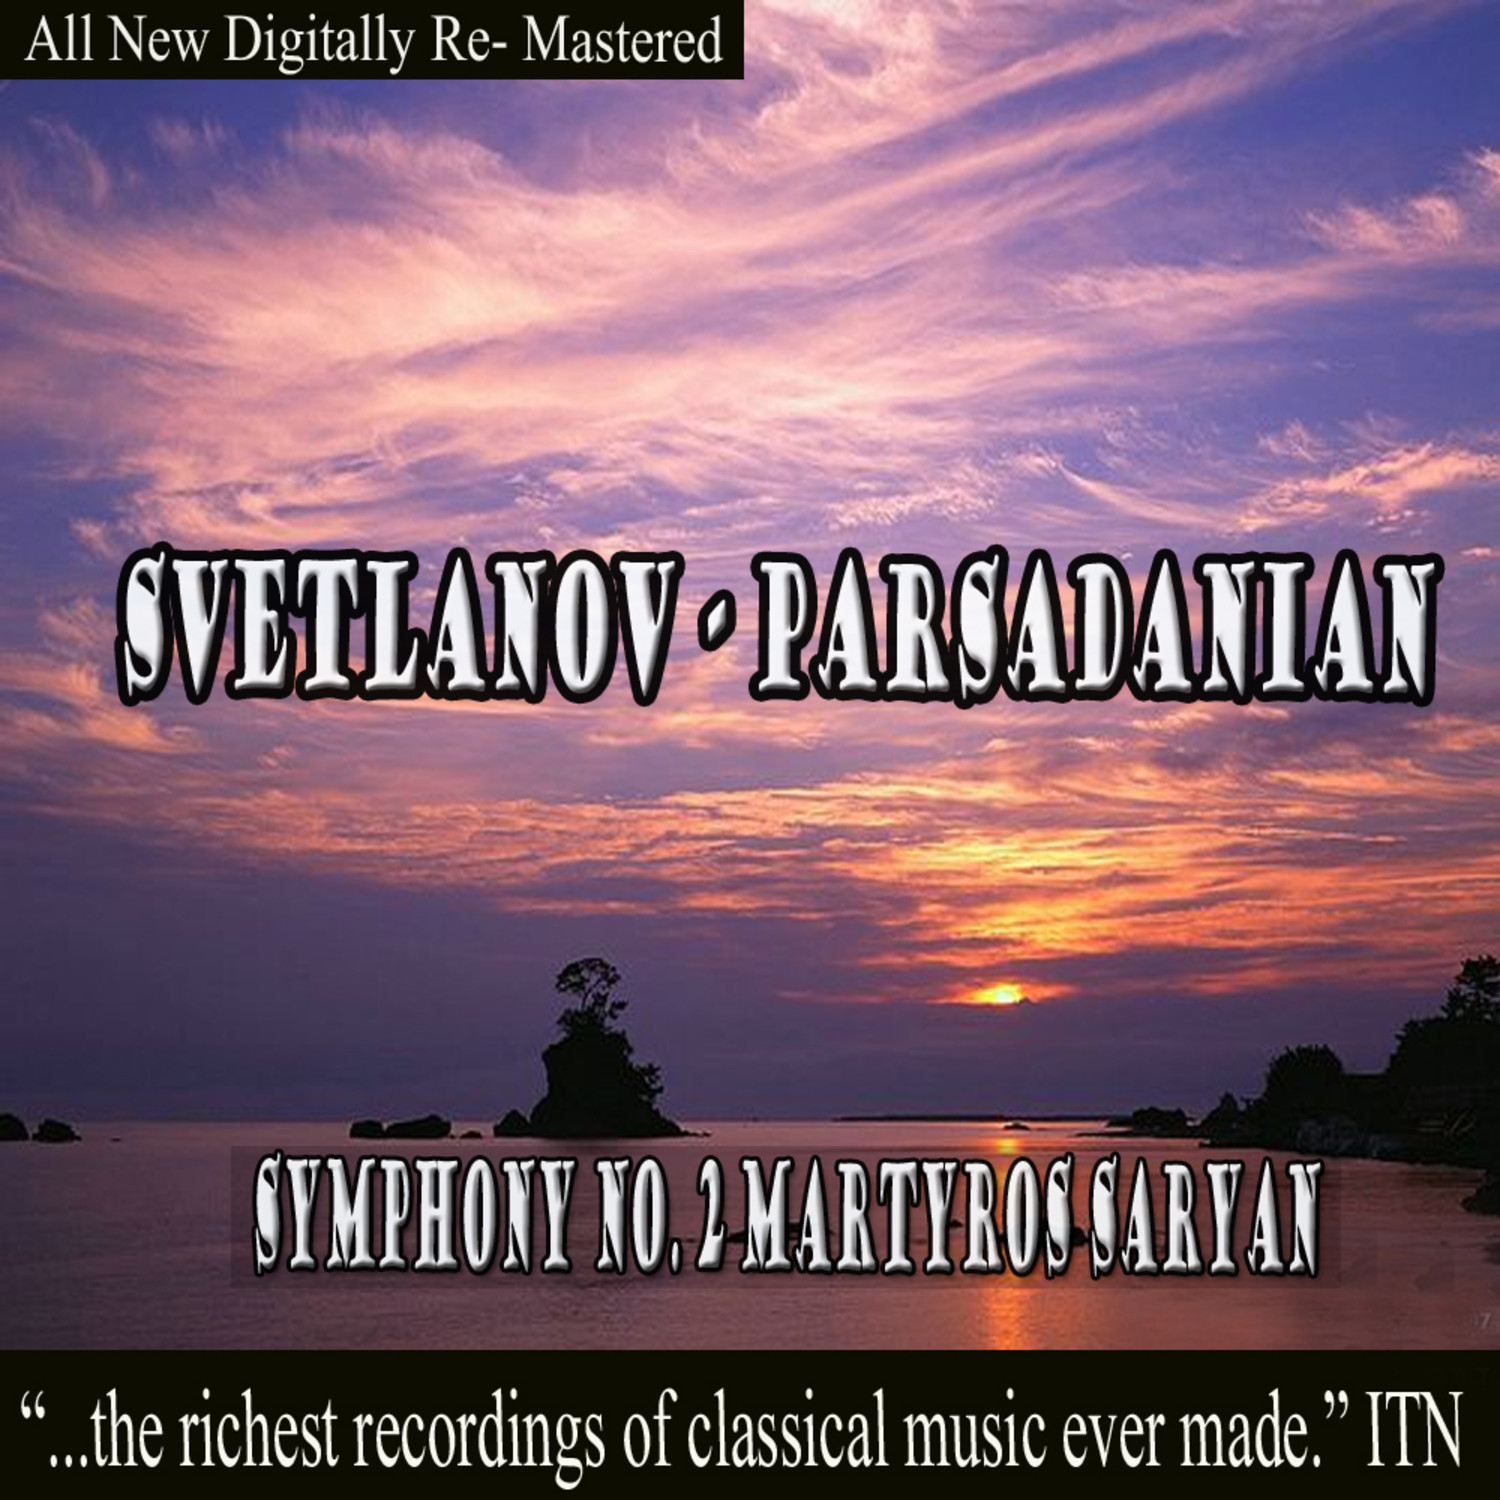 Symphony No. 2 'Martyros Saryan', Intermezzo